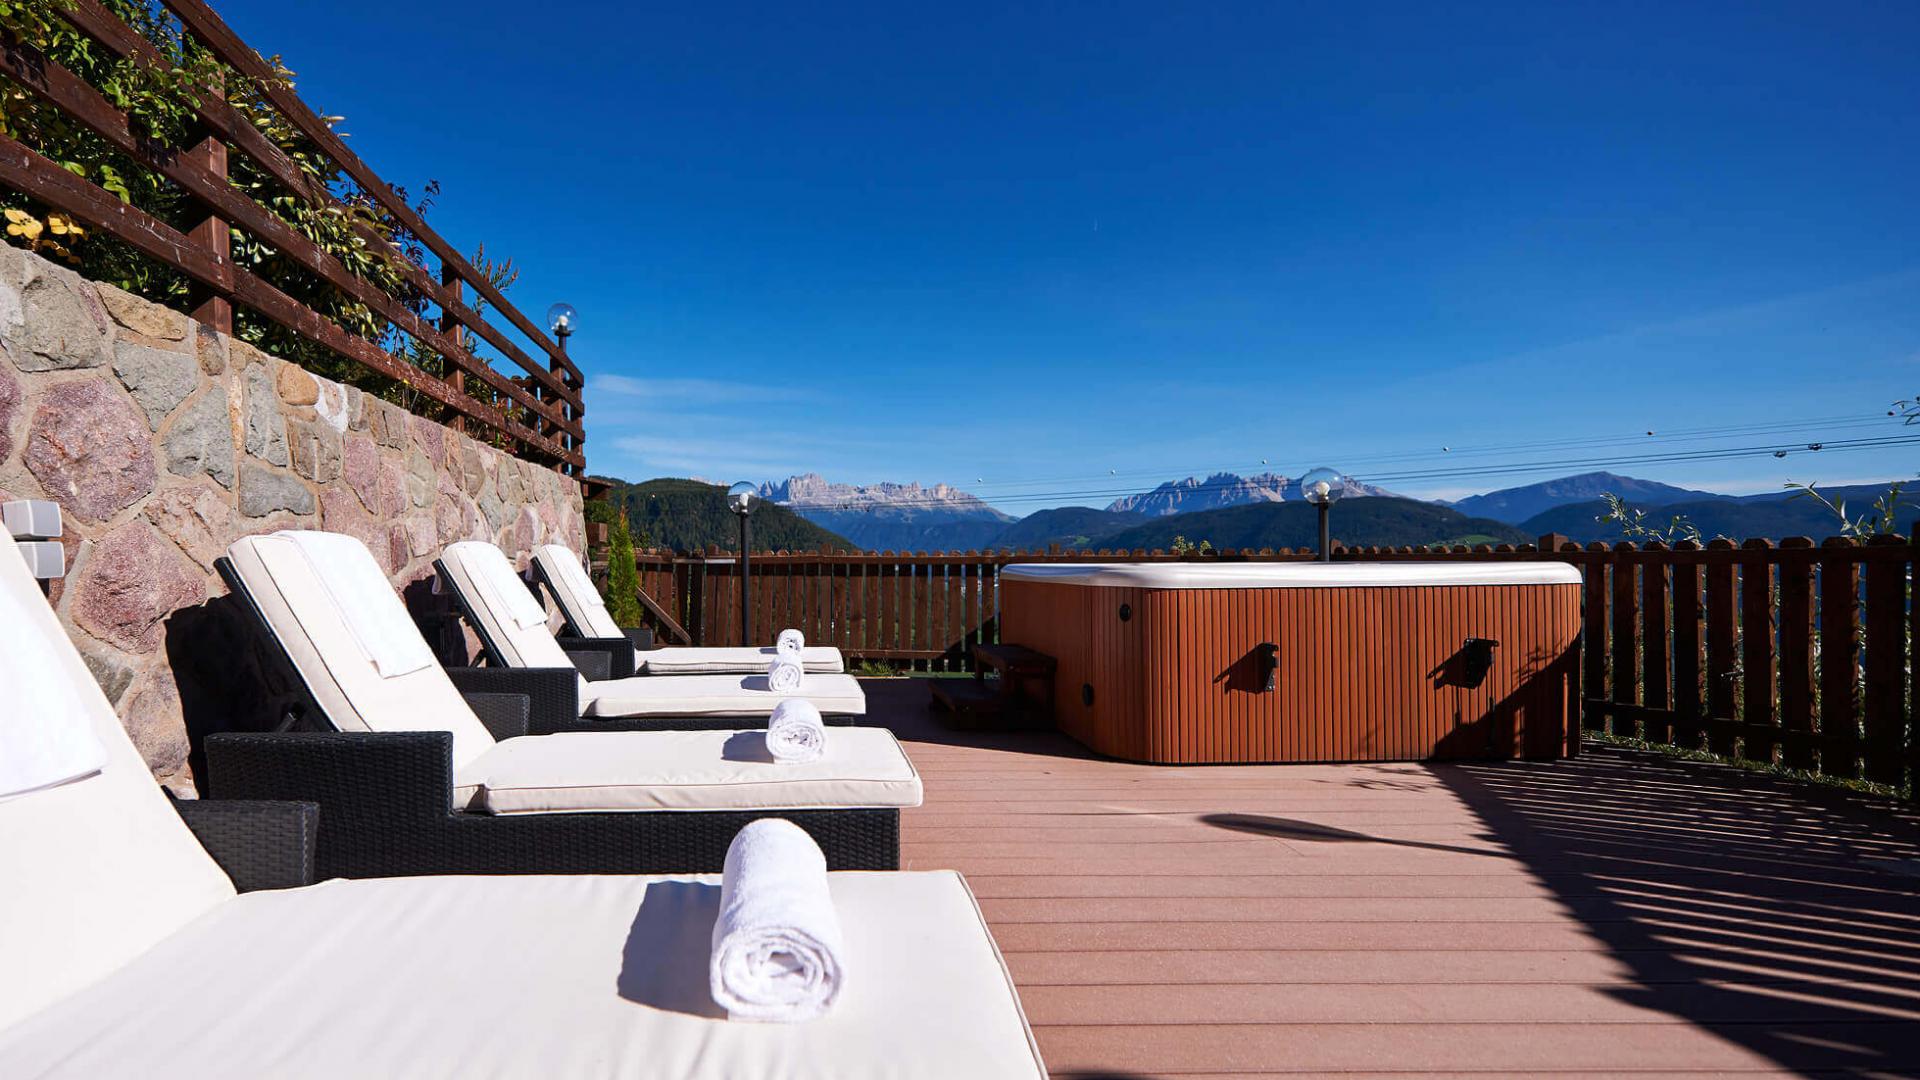 Ferienhaus in Südtirol mieten Sonnenliegen Jacuzzi Whirlpool Hottub